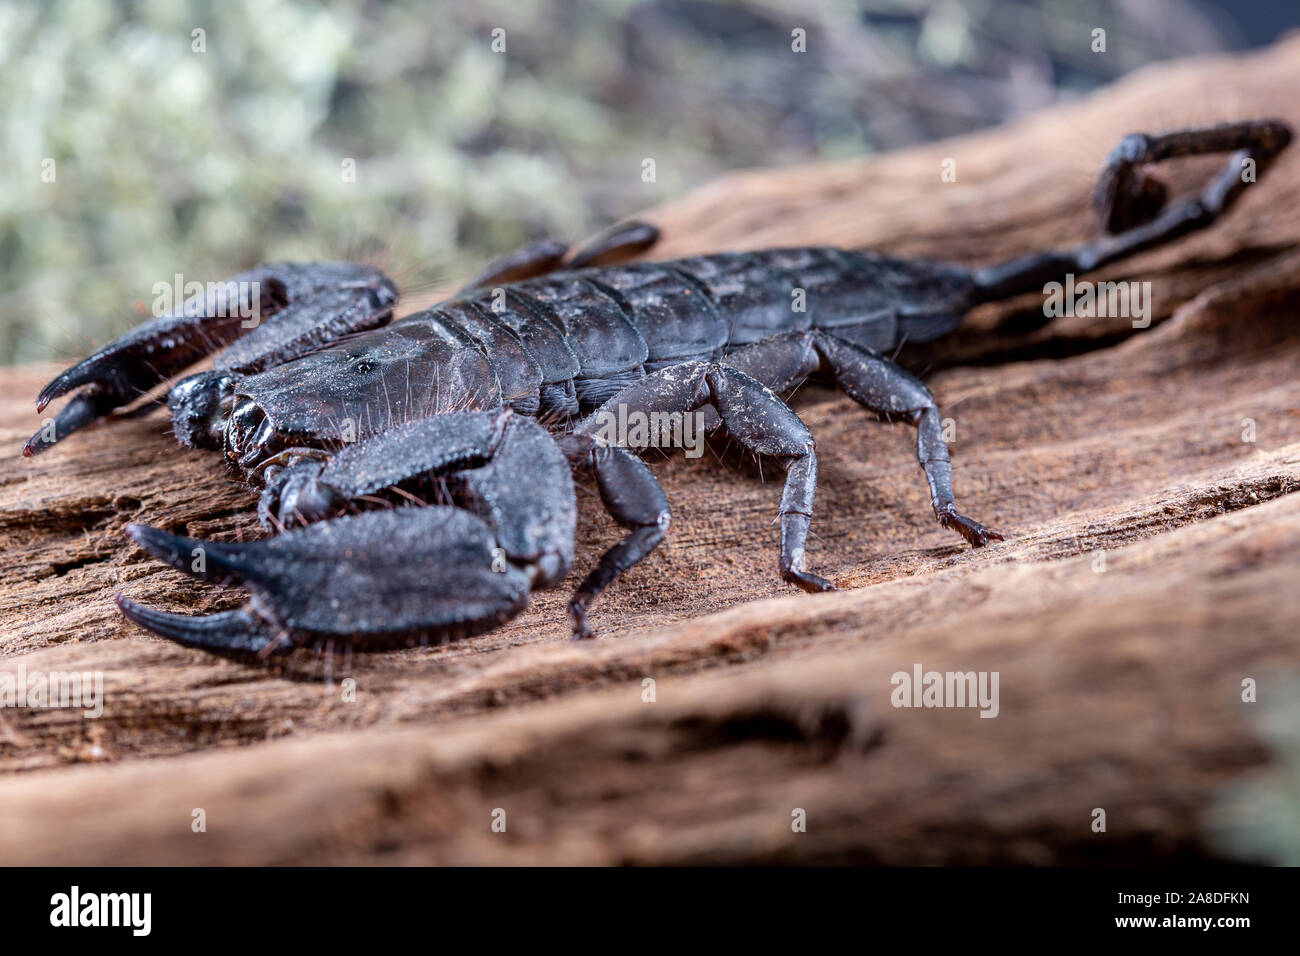 Flat Rock Scorpion, Hadogenes troglodytes, on a piece of tree bark Stock Photo